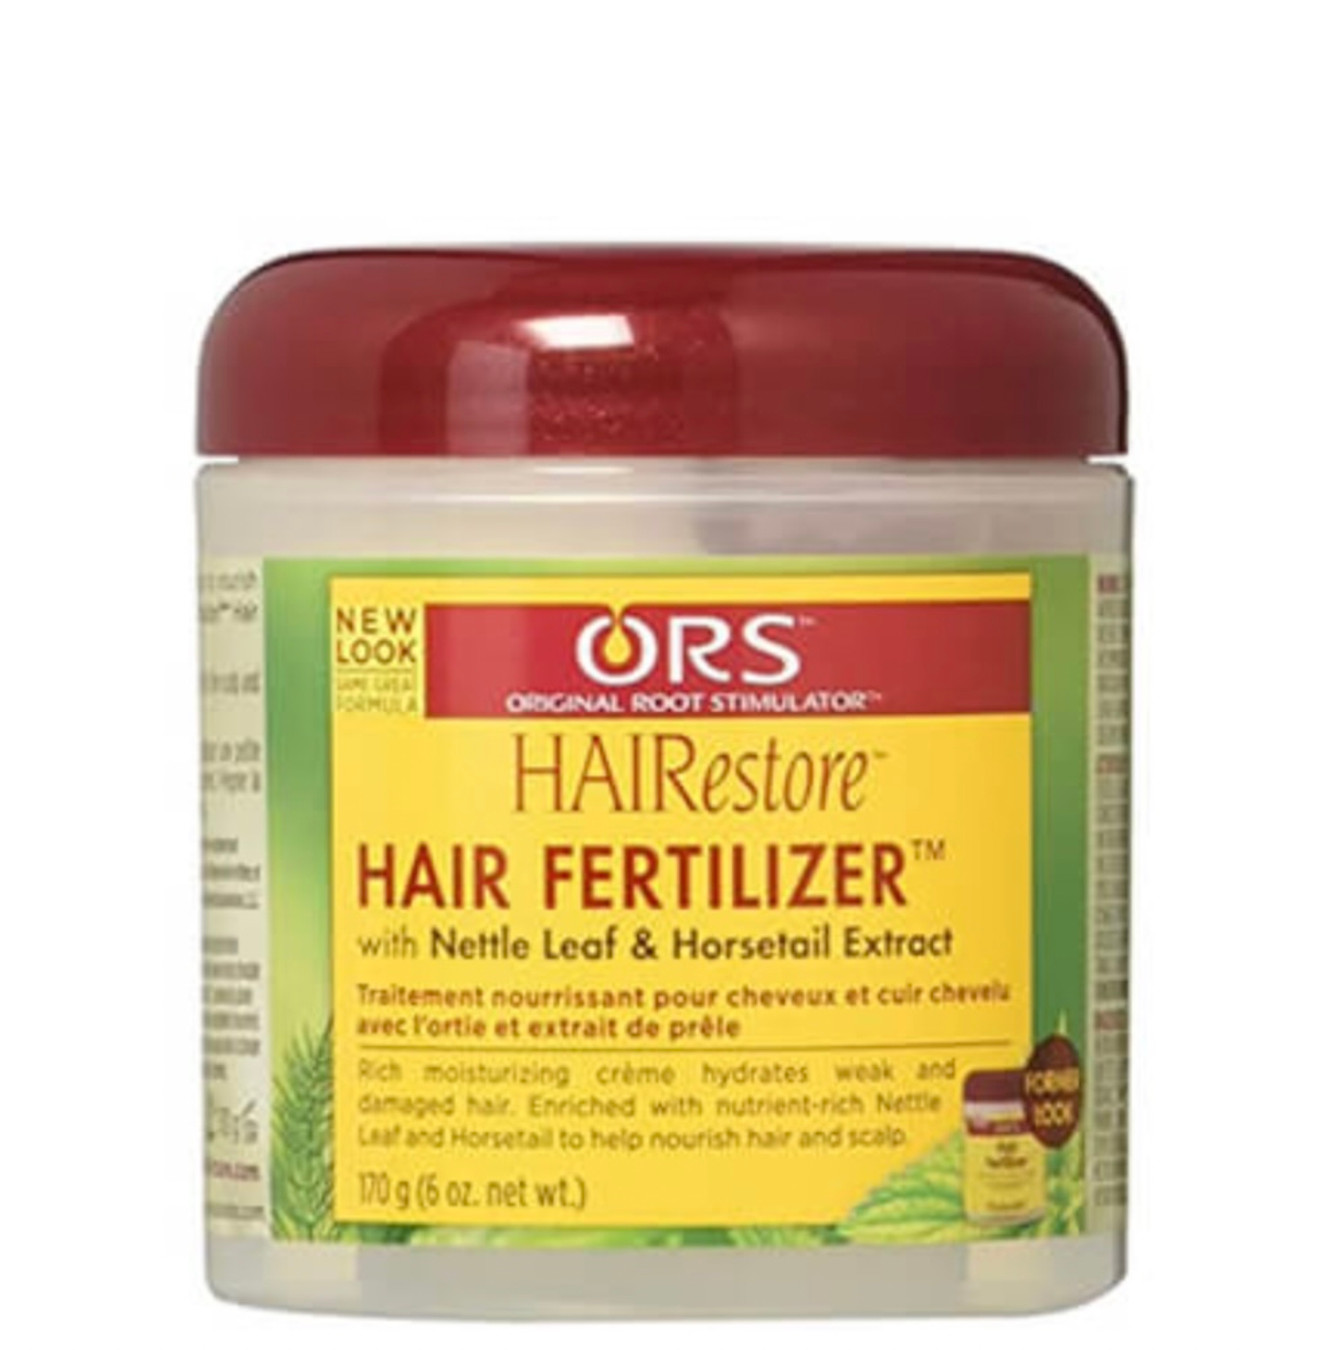 ORS HAIRestore Hair Fertilizer